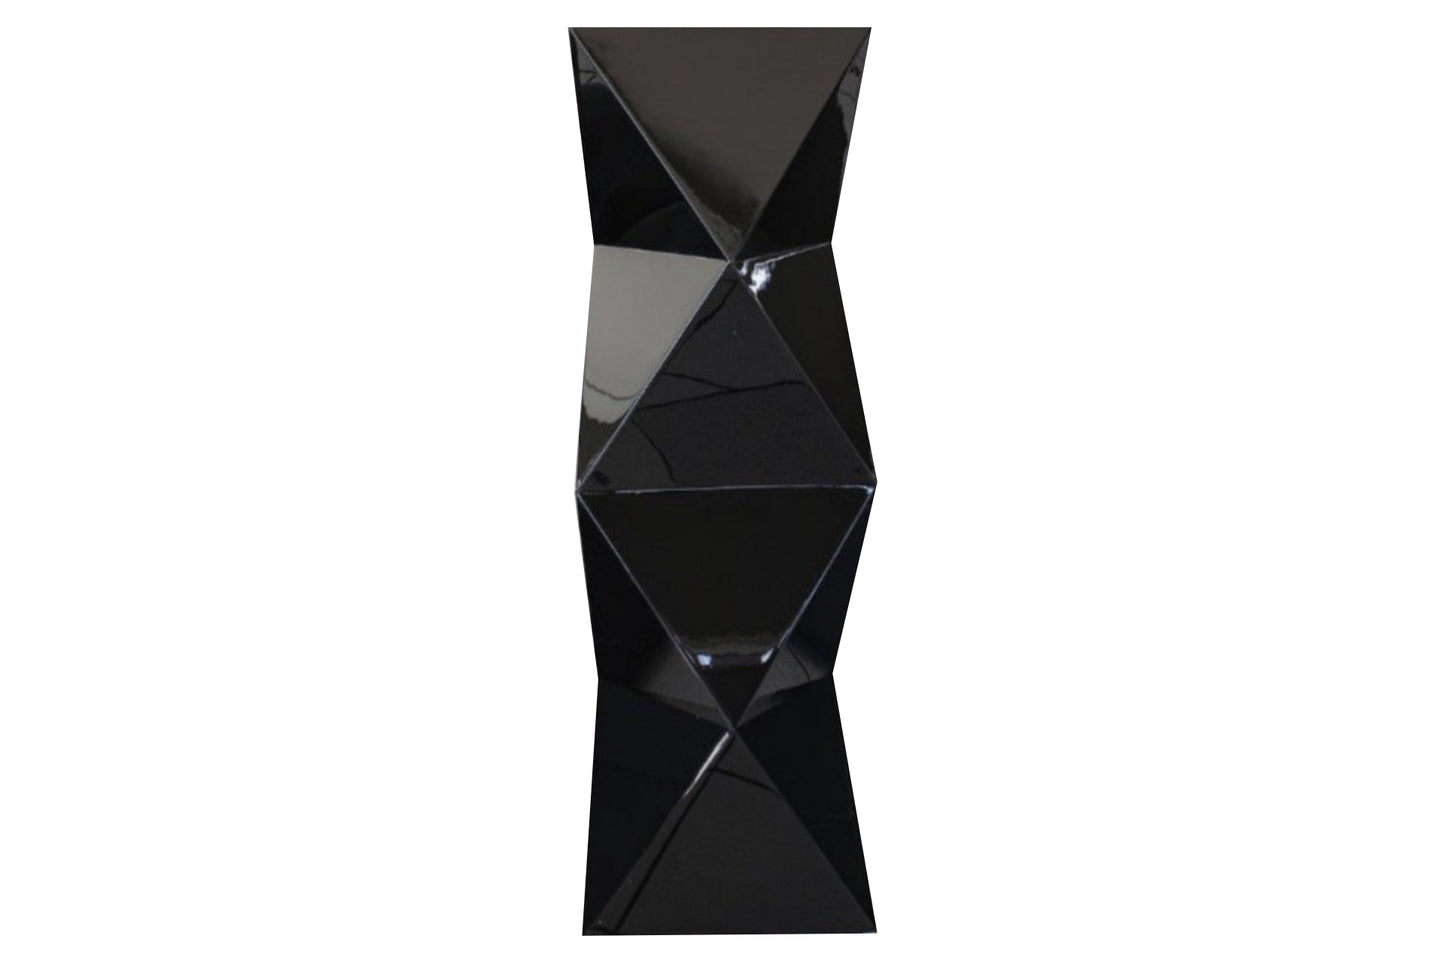 Gloss black cubist style decor stand